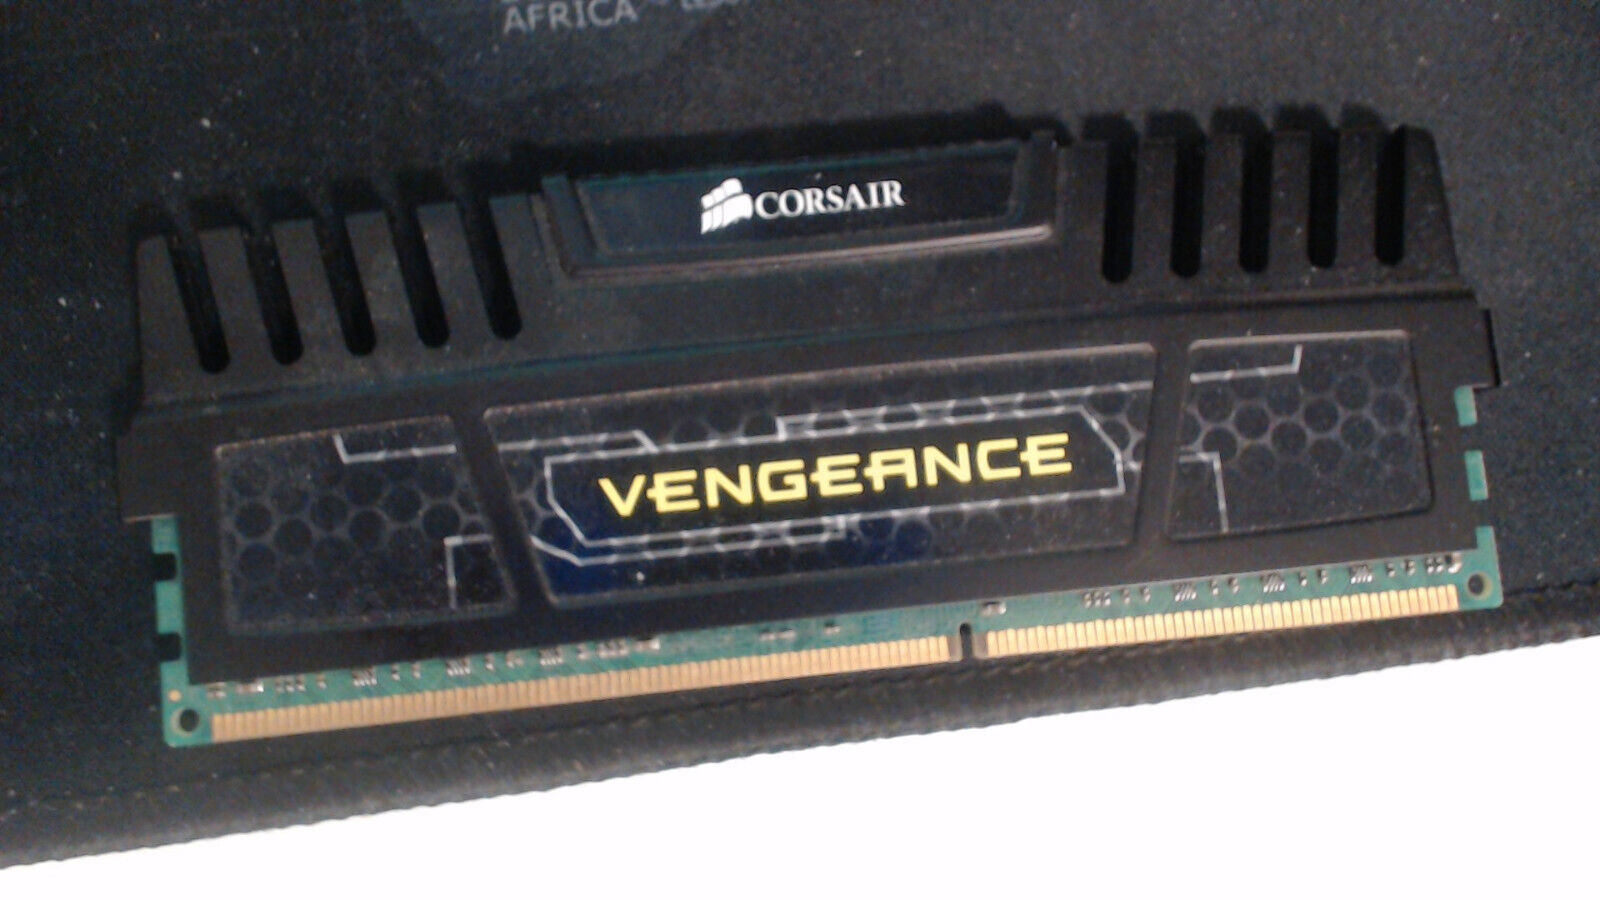 Corsair Vengeance 4GB RAM CMZ24GX3M6A1600C9 1600MHz DDR3 Memory Stick